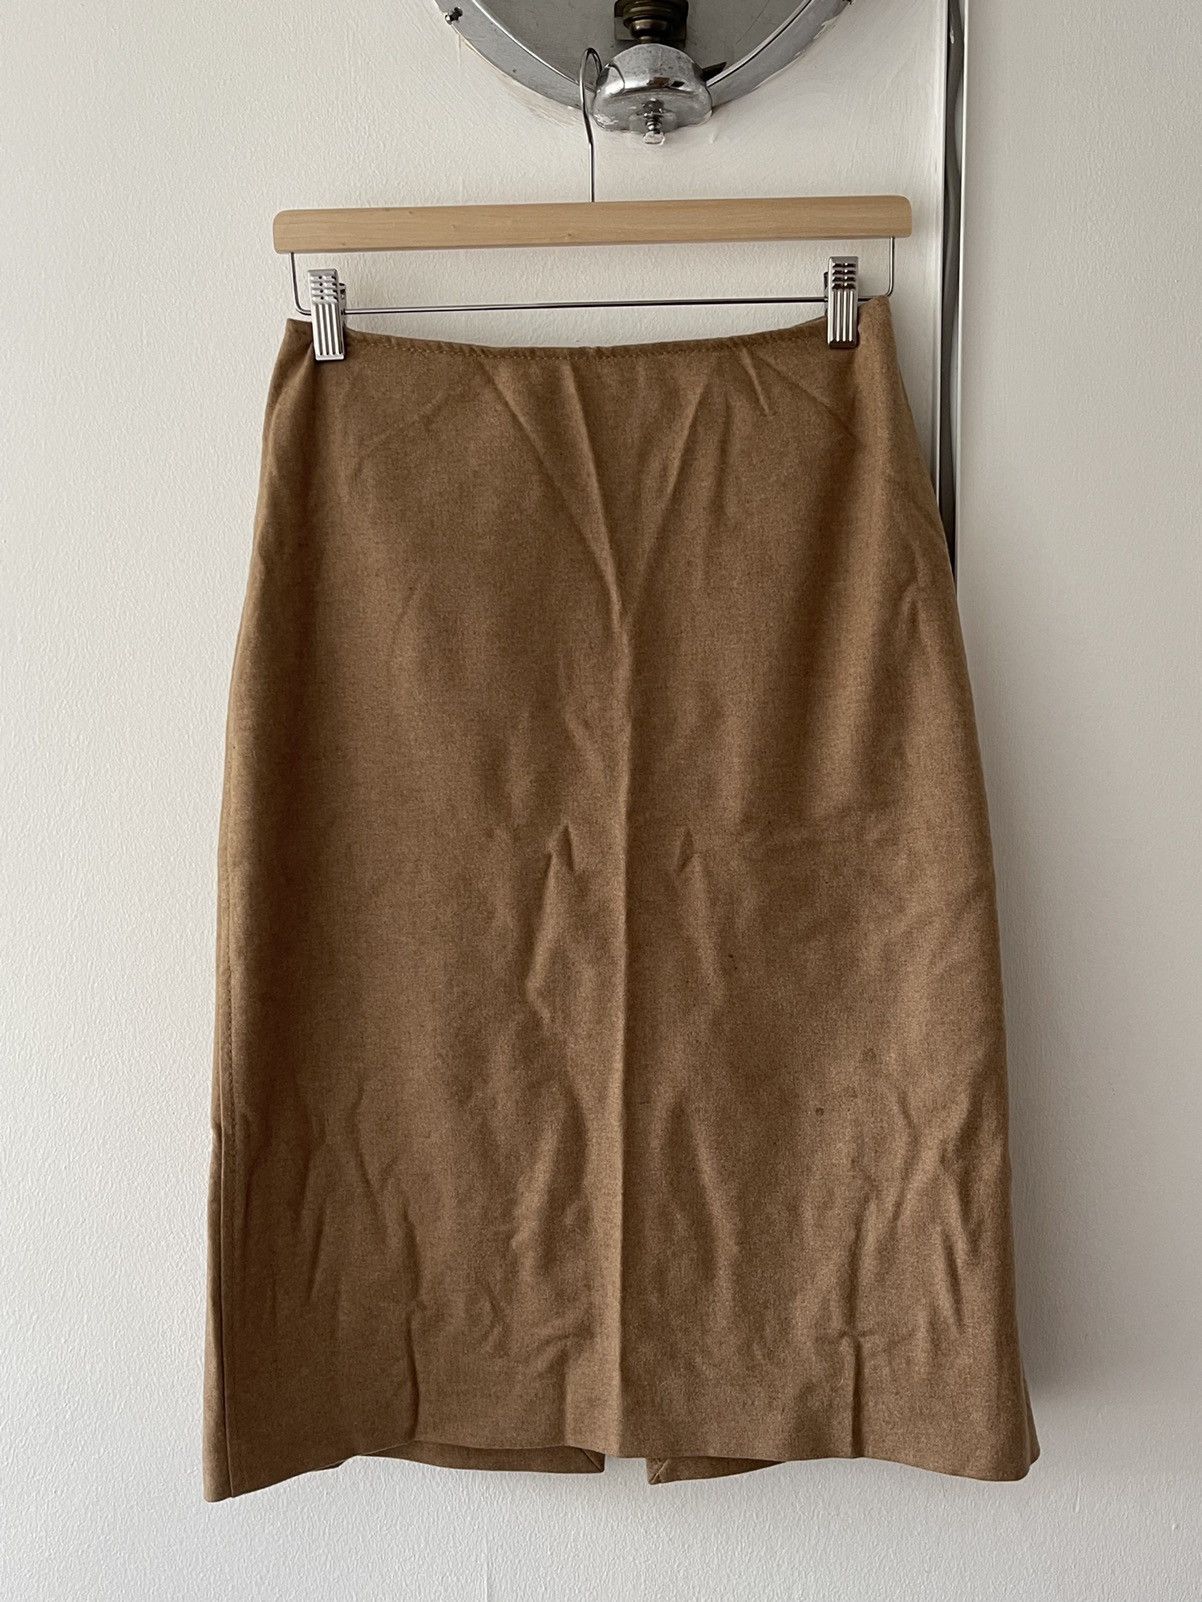 Miu Miu Vintage Miu Miu FW 1999 midi skirt Size 28" / US 6 / IT 42 - 1 Preview